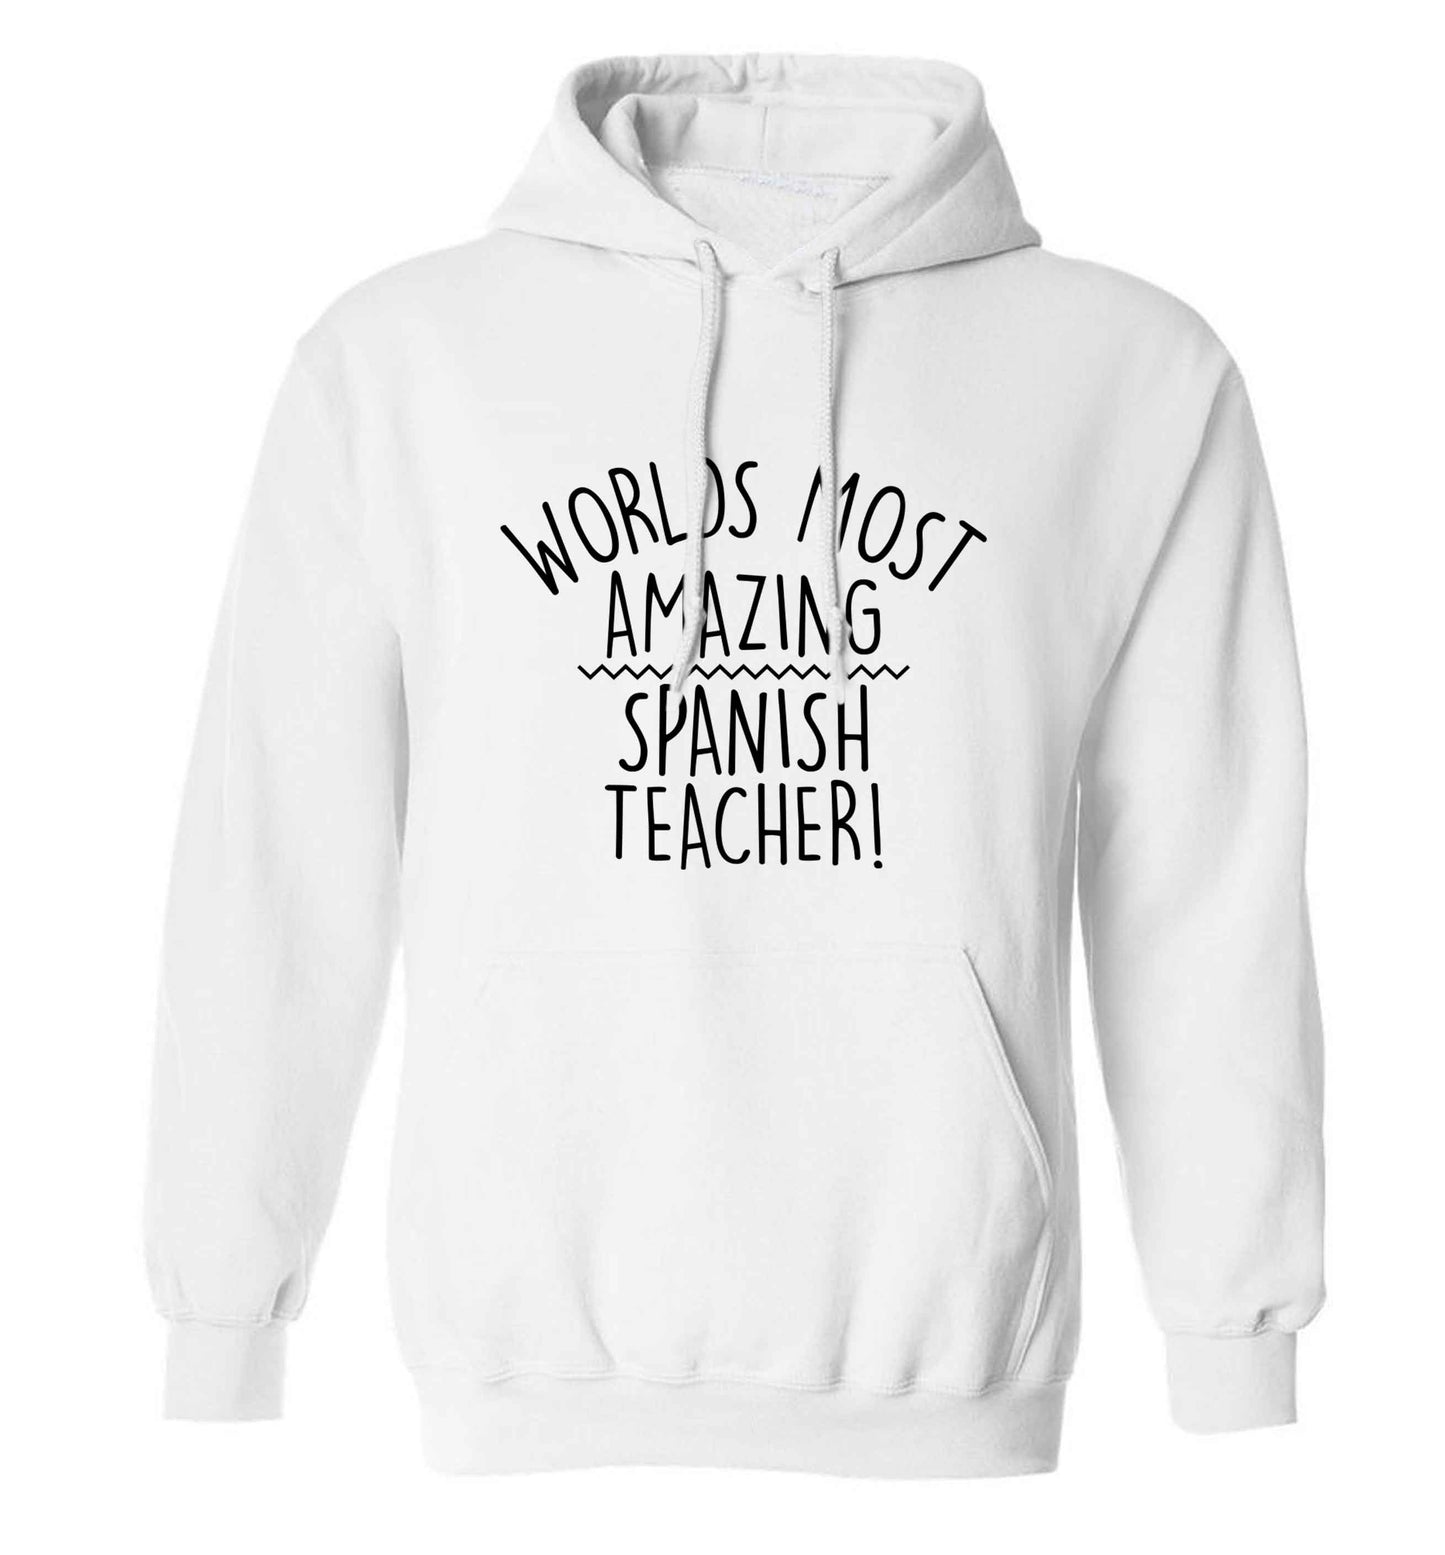 Worlds most amazing Spanish teacher adults unisex white hoodie 2XL